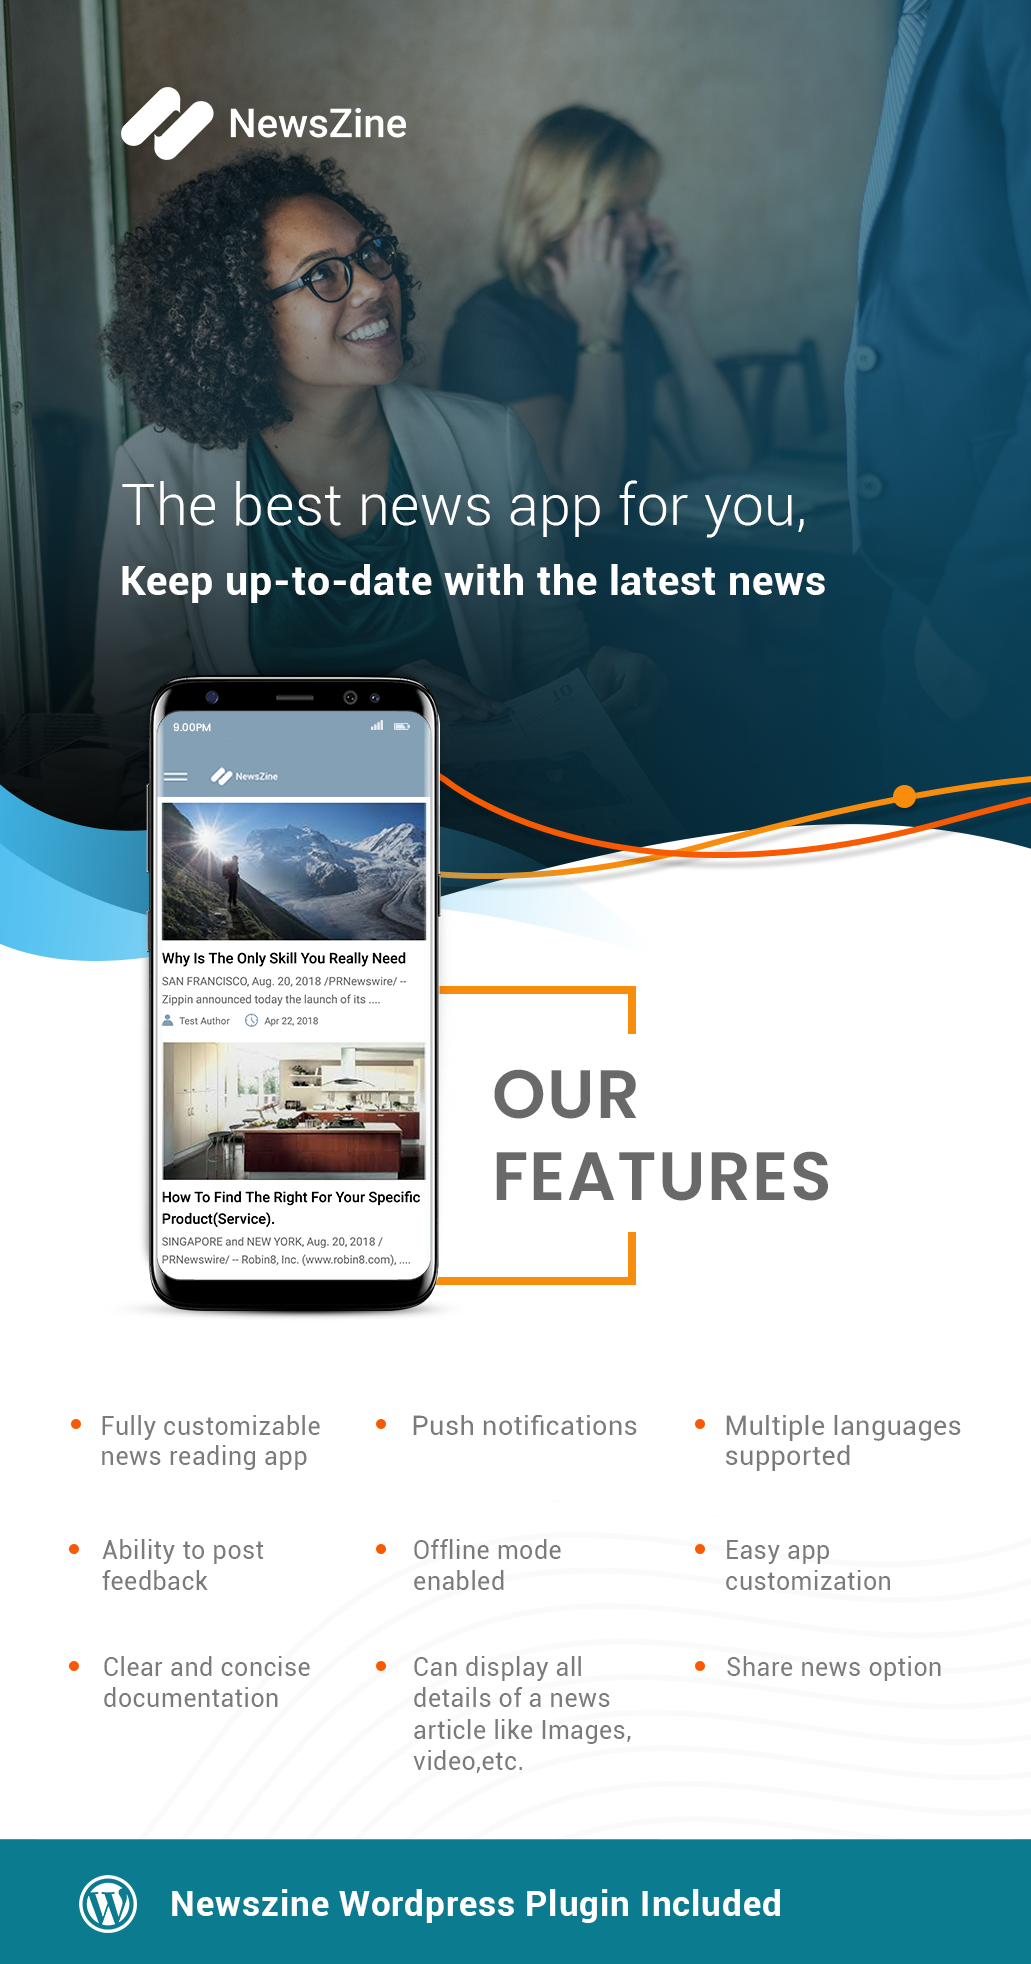 NewsZine - A complete News / Magazine App, Wordpress Supported. - 1